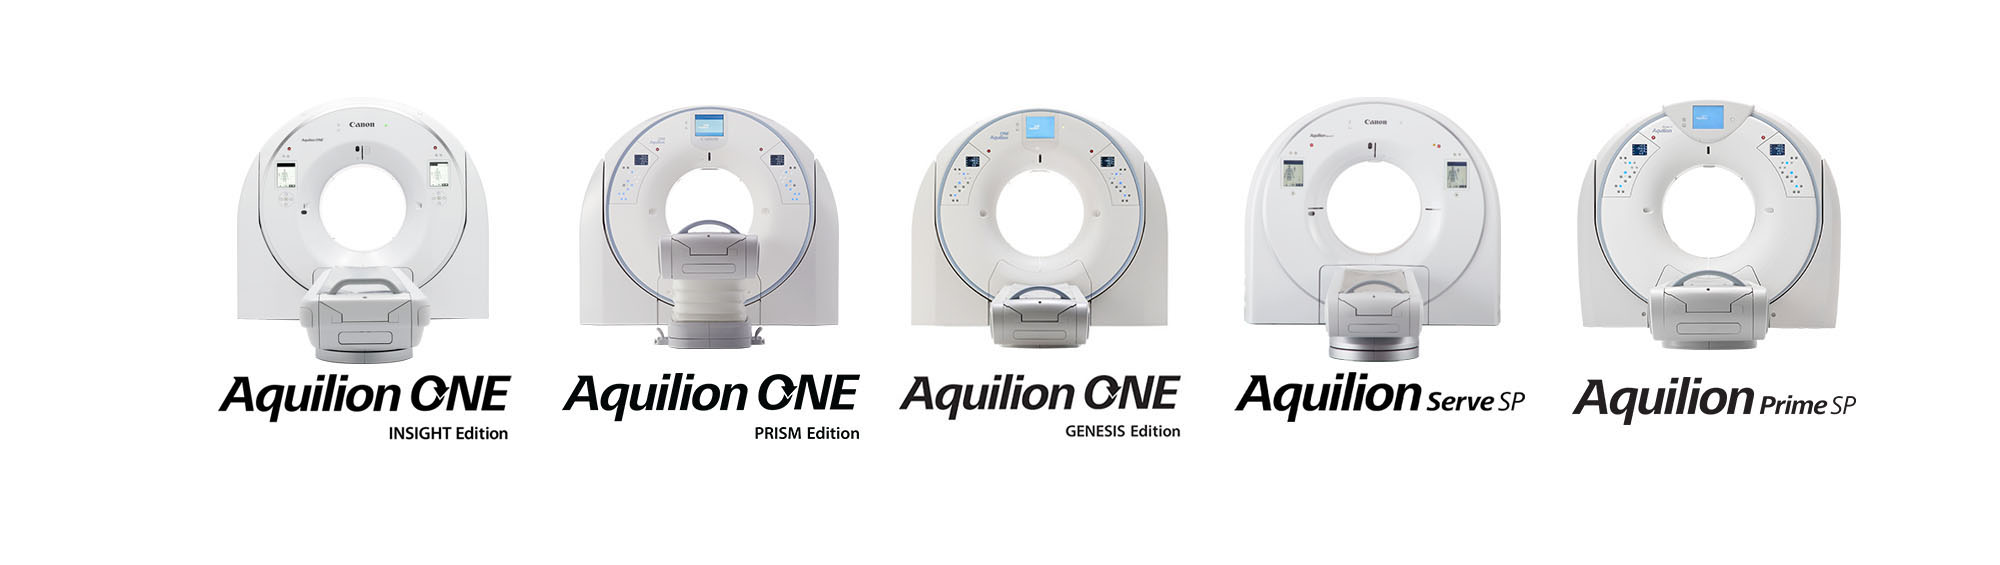 Aquilion ONE / INSIGHT Edition, Aquilion ONE / PRISM Edition, Aquilion ONE / GENESIS Edition, Aquilion Serve SP, Aquilion Prime SP